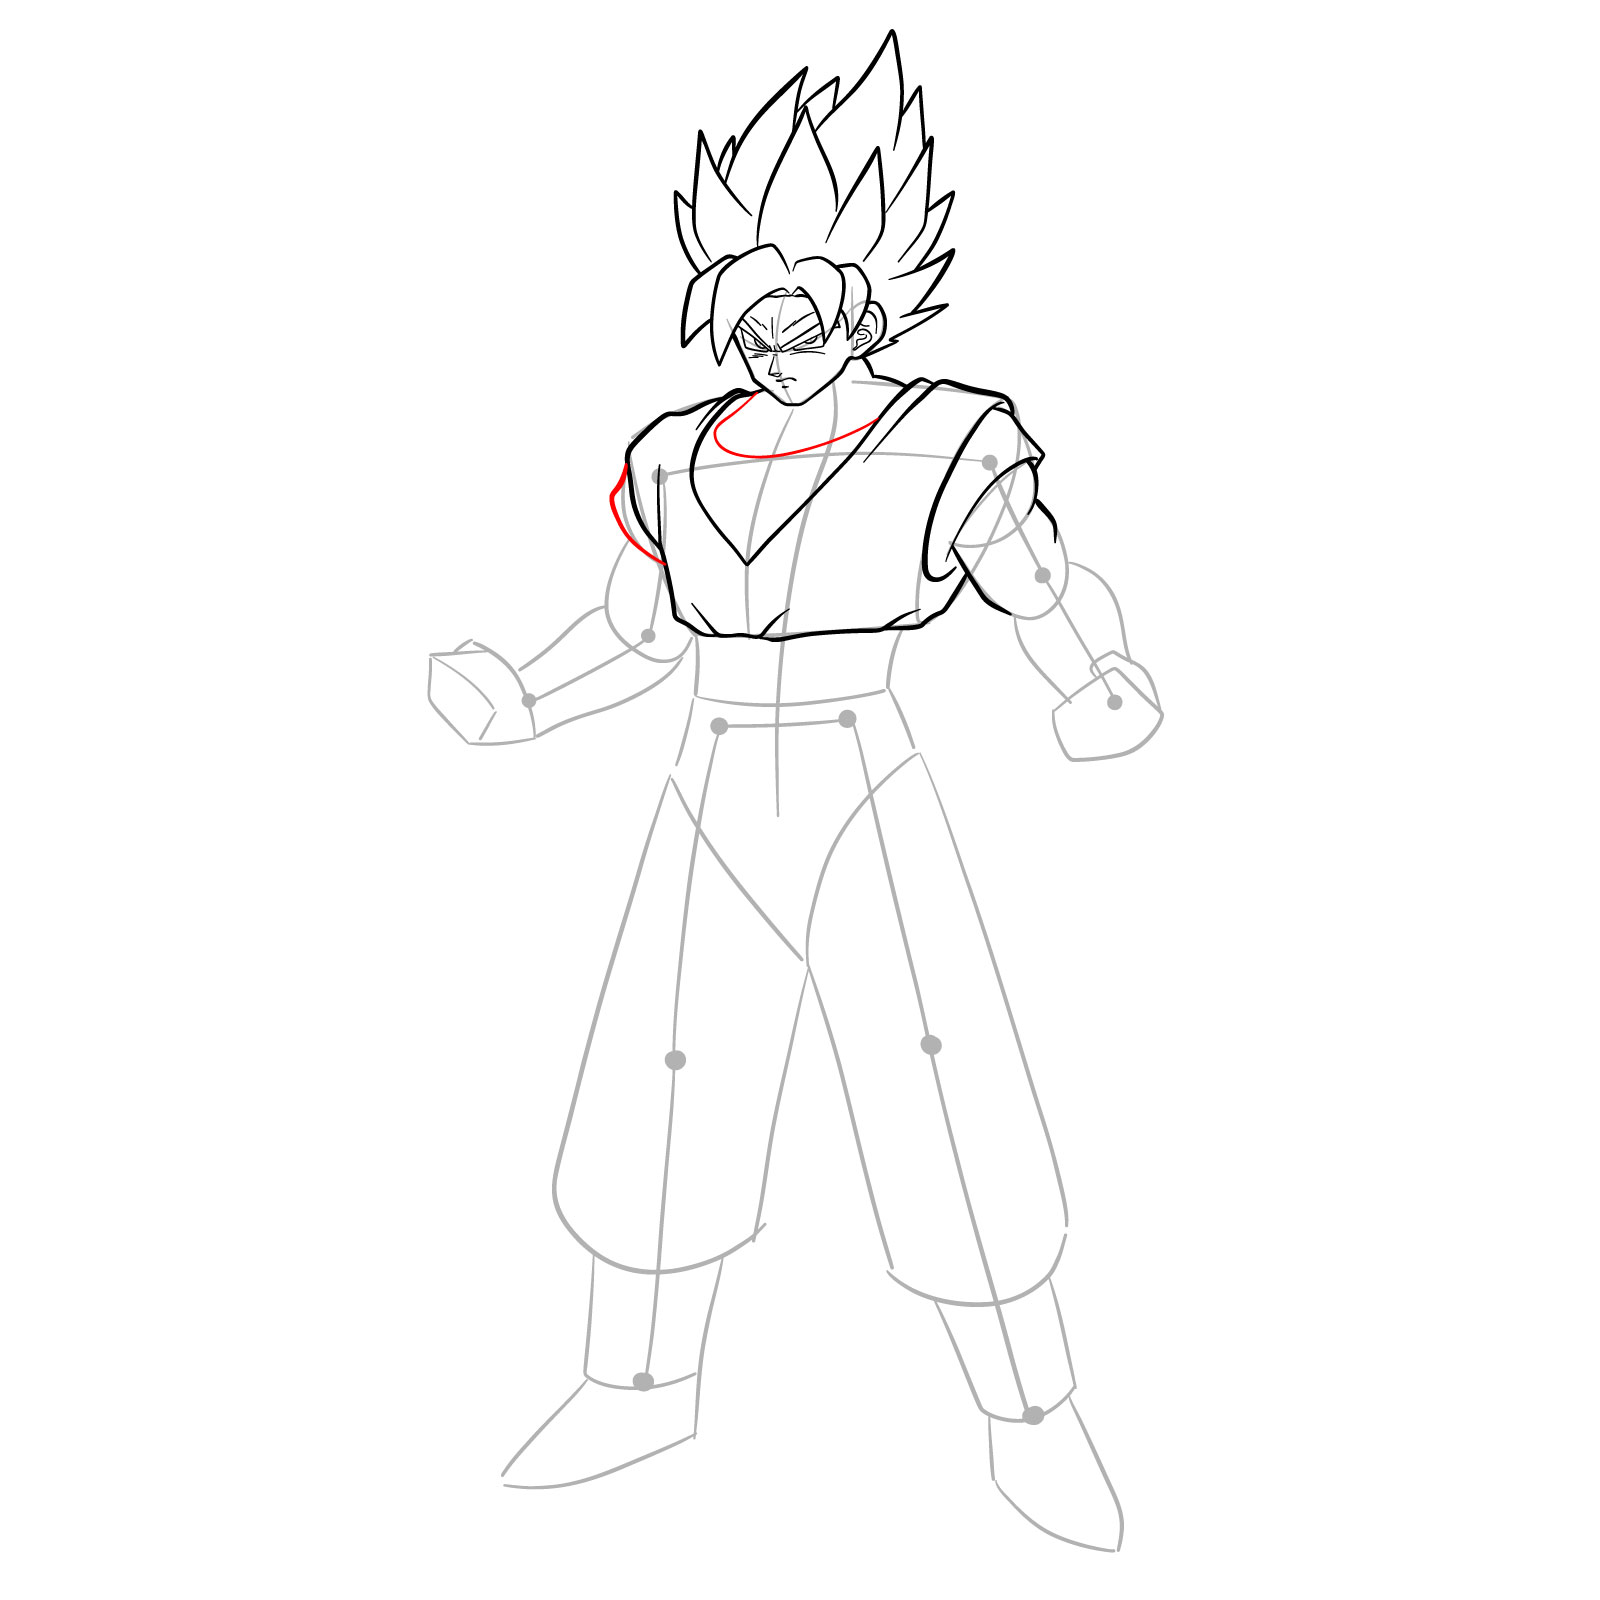 How to draw Goku in Super Saiyan form - step 20